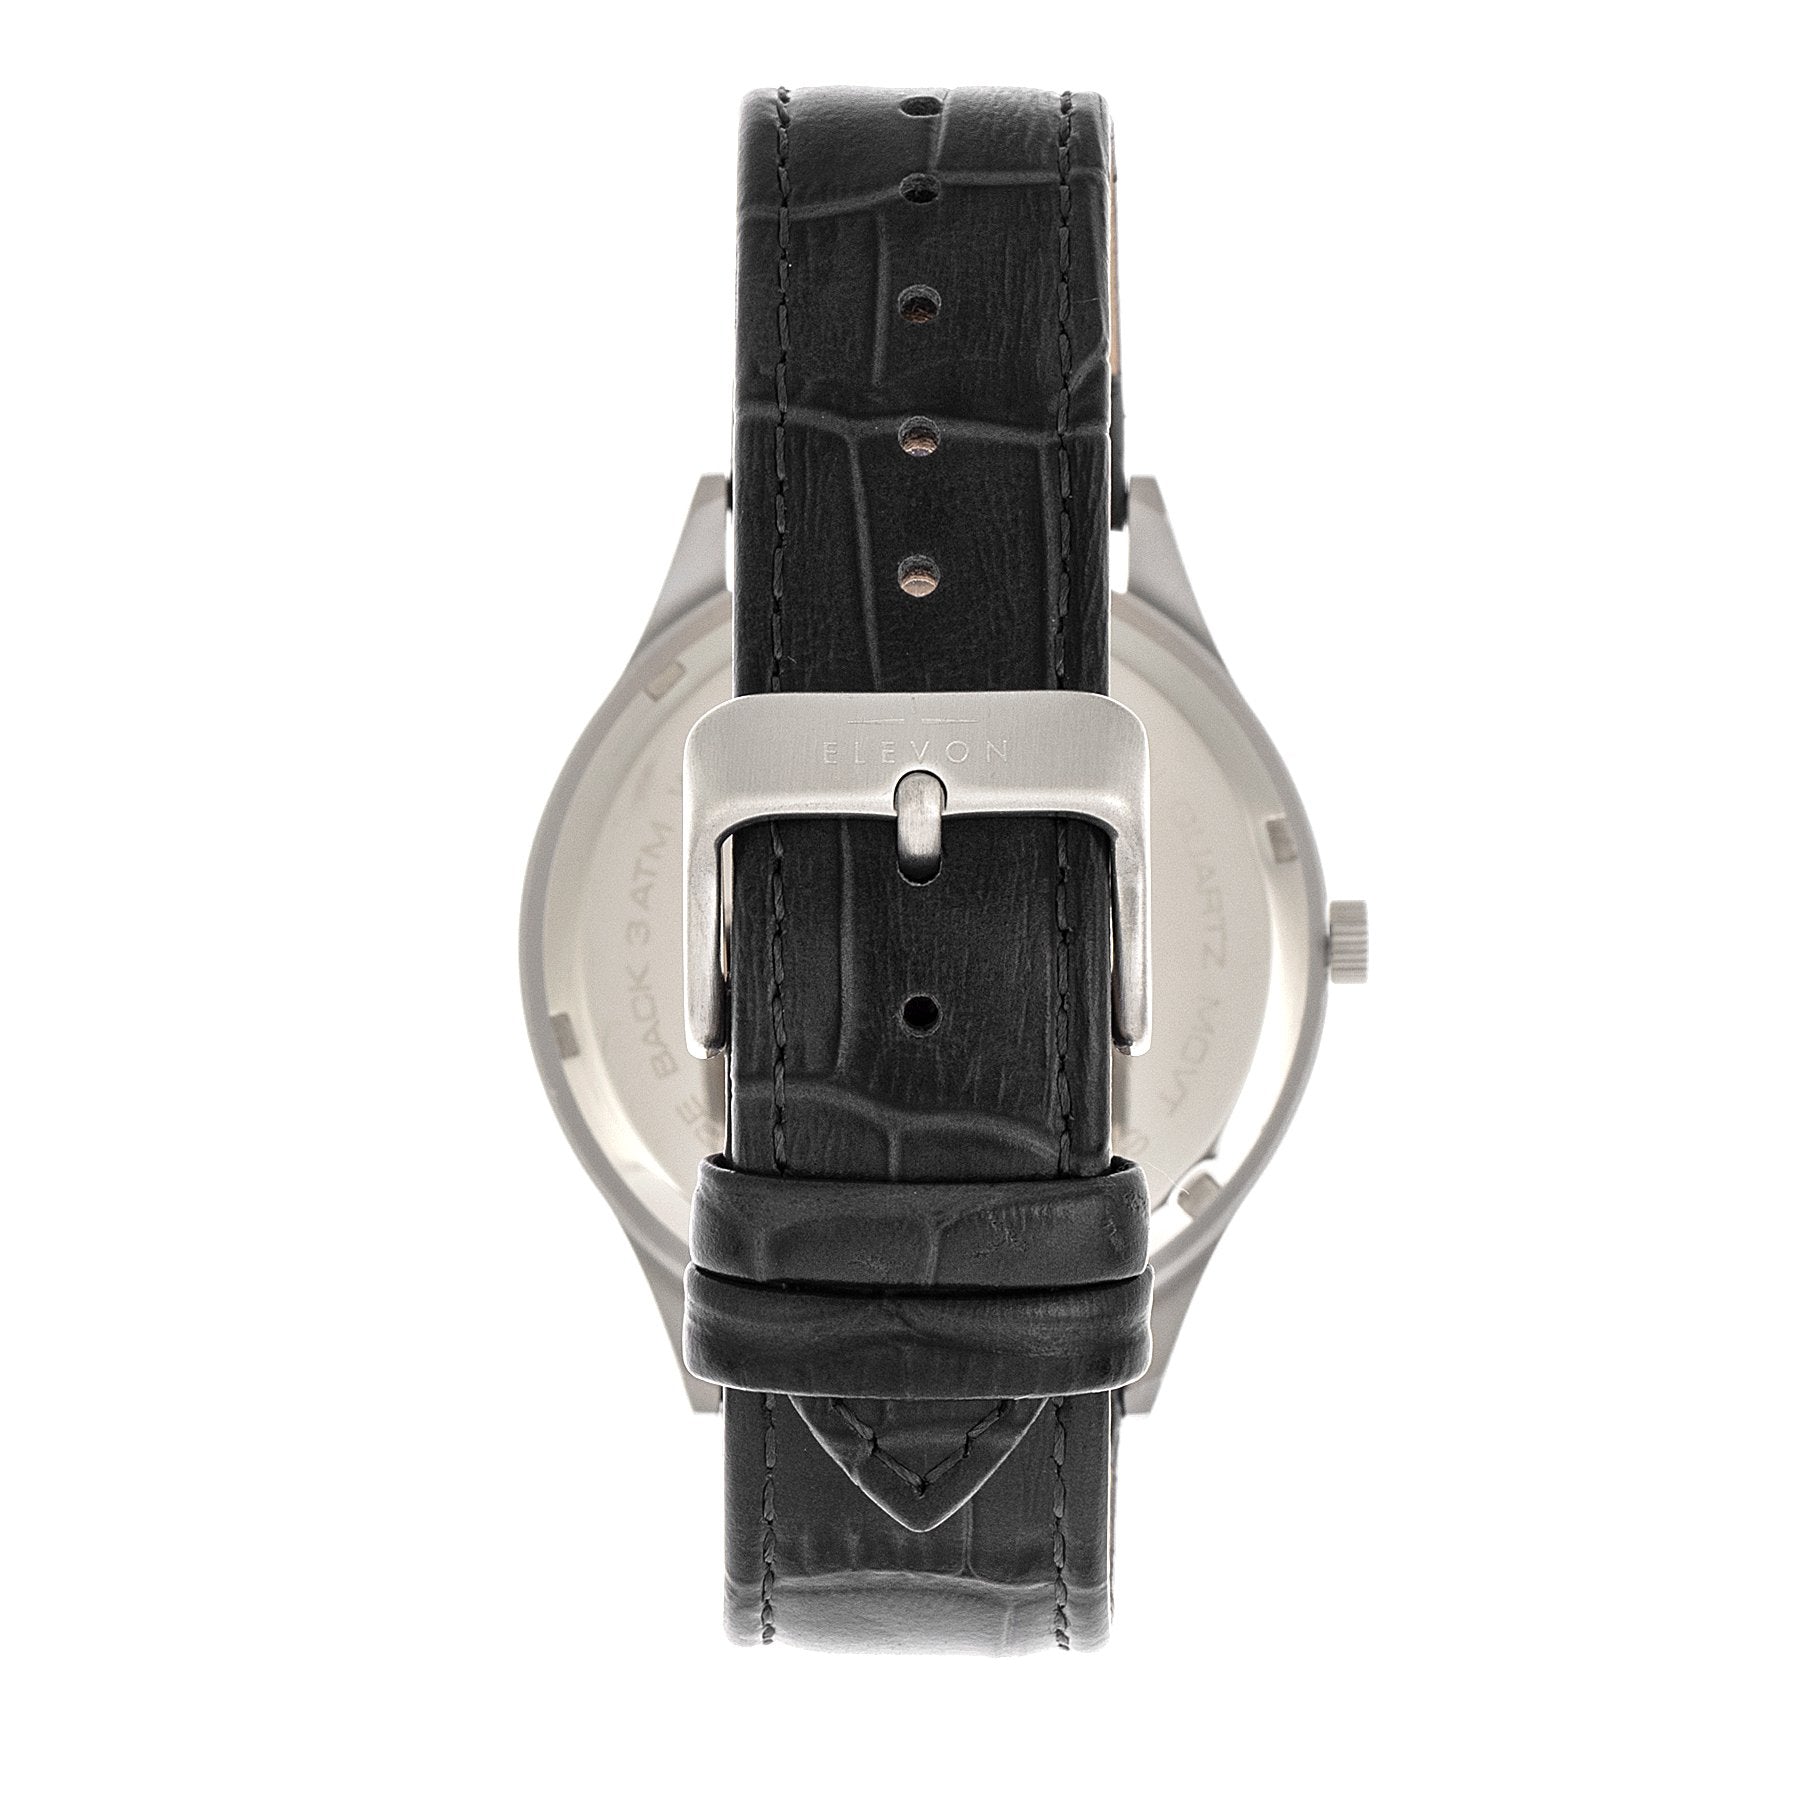 Elevon Concorde Leather-Band Watch w/Date - Silver/Black - ELE115-2